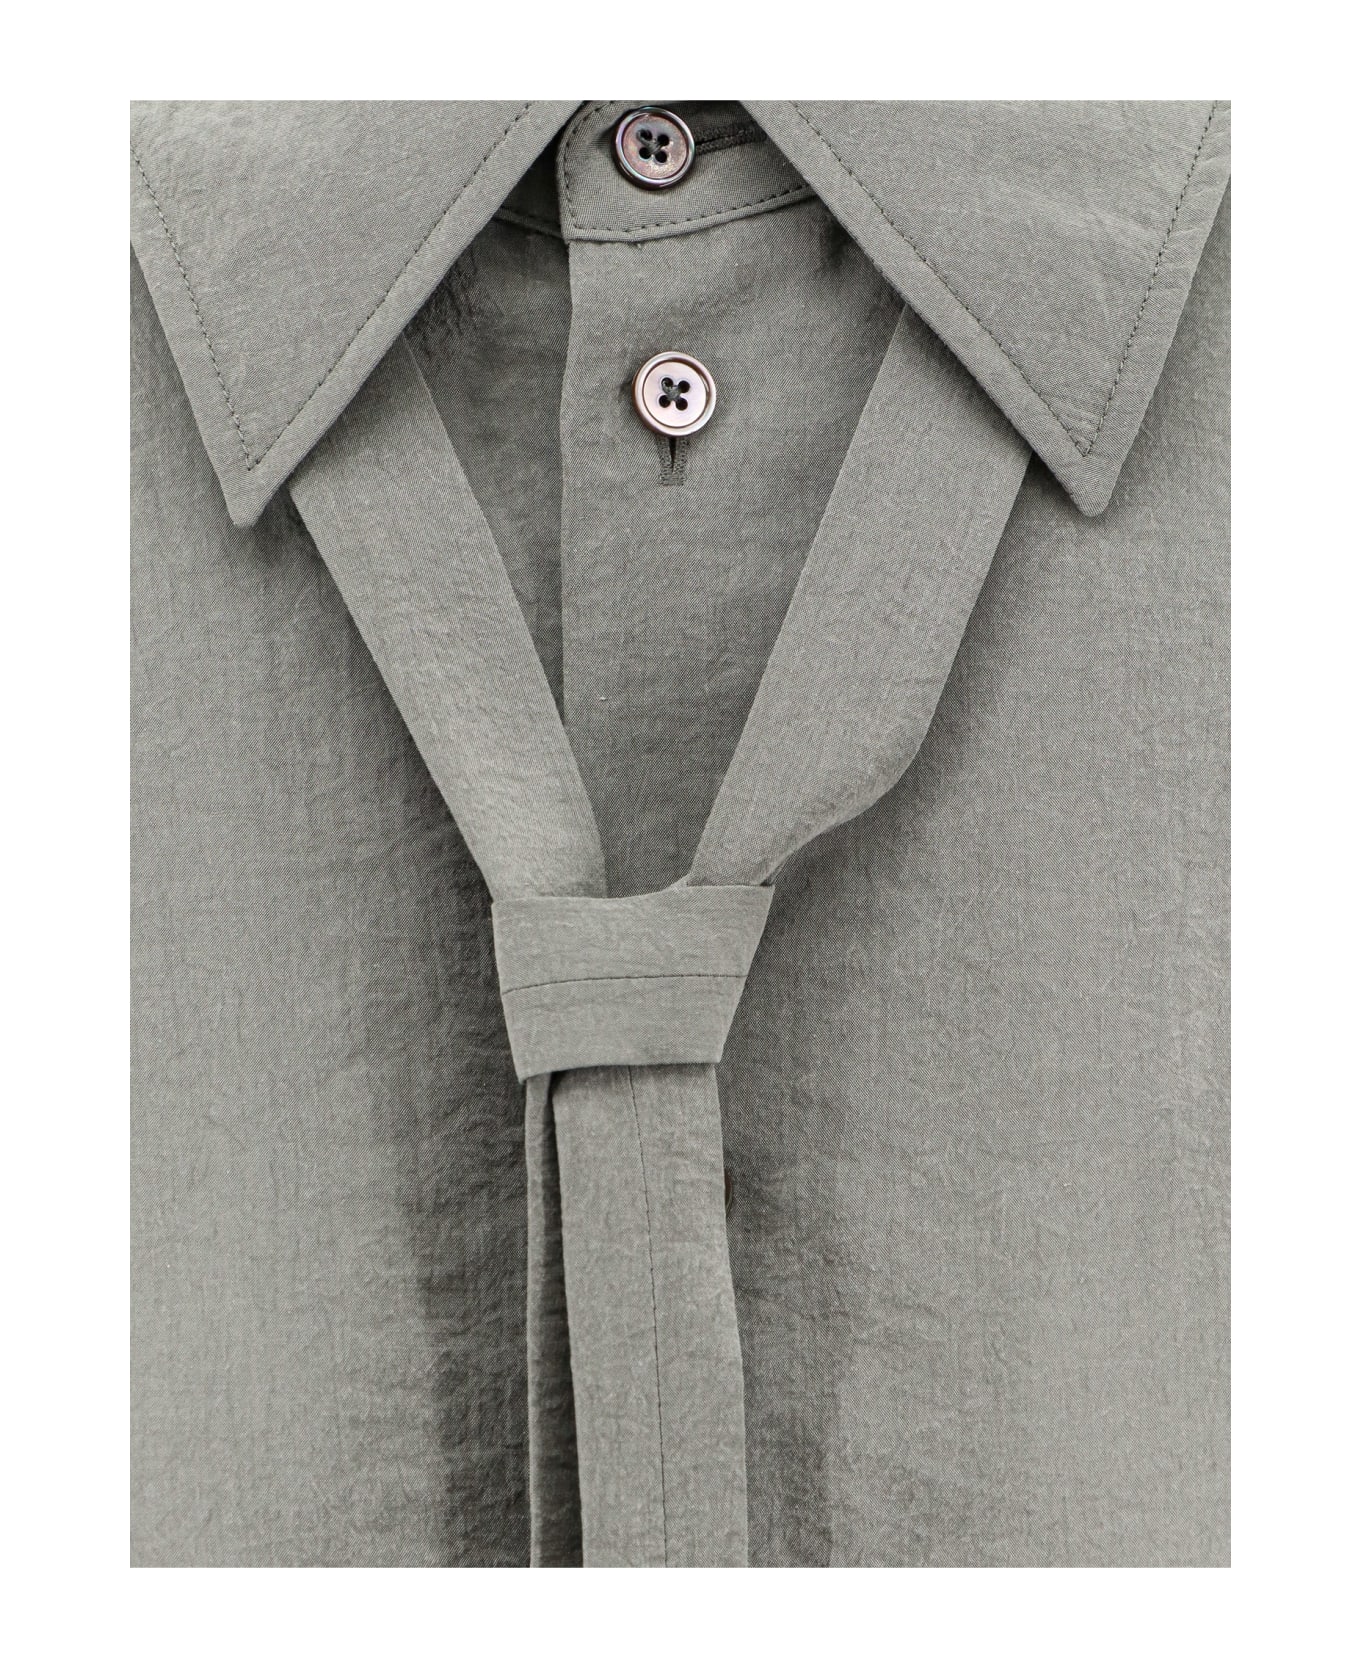 Lemaire Shirt - Grey